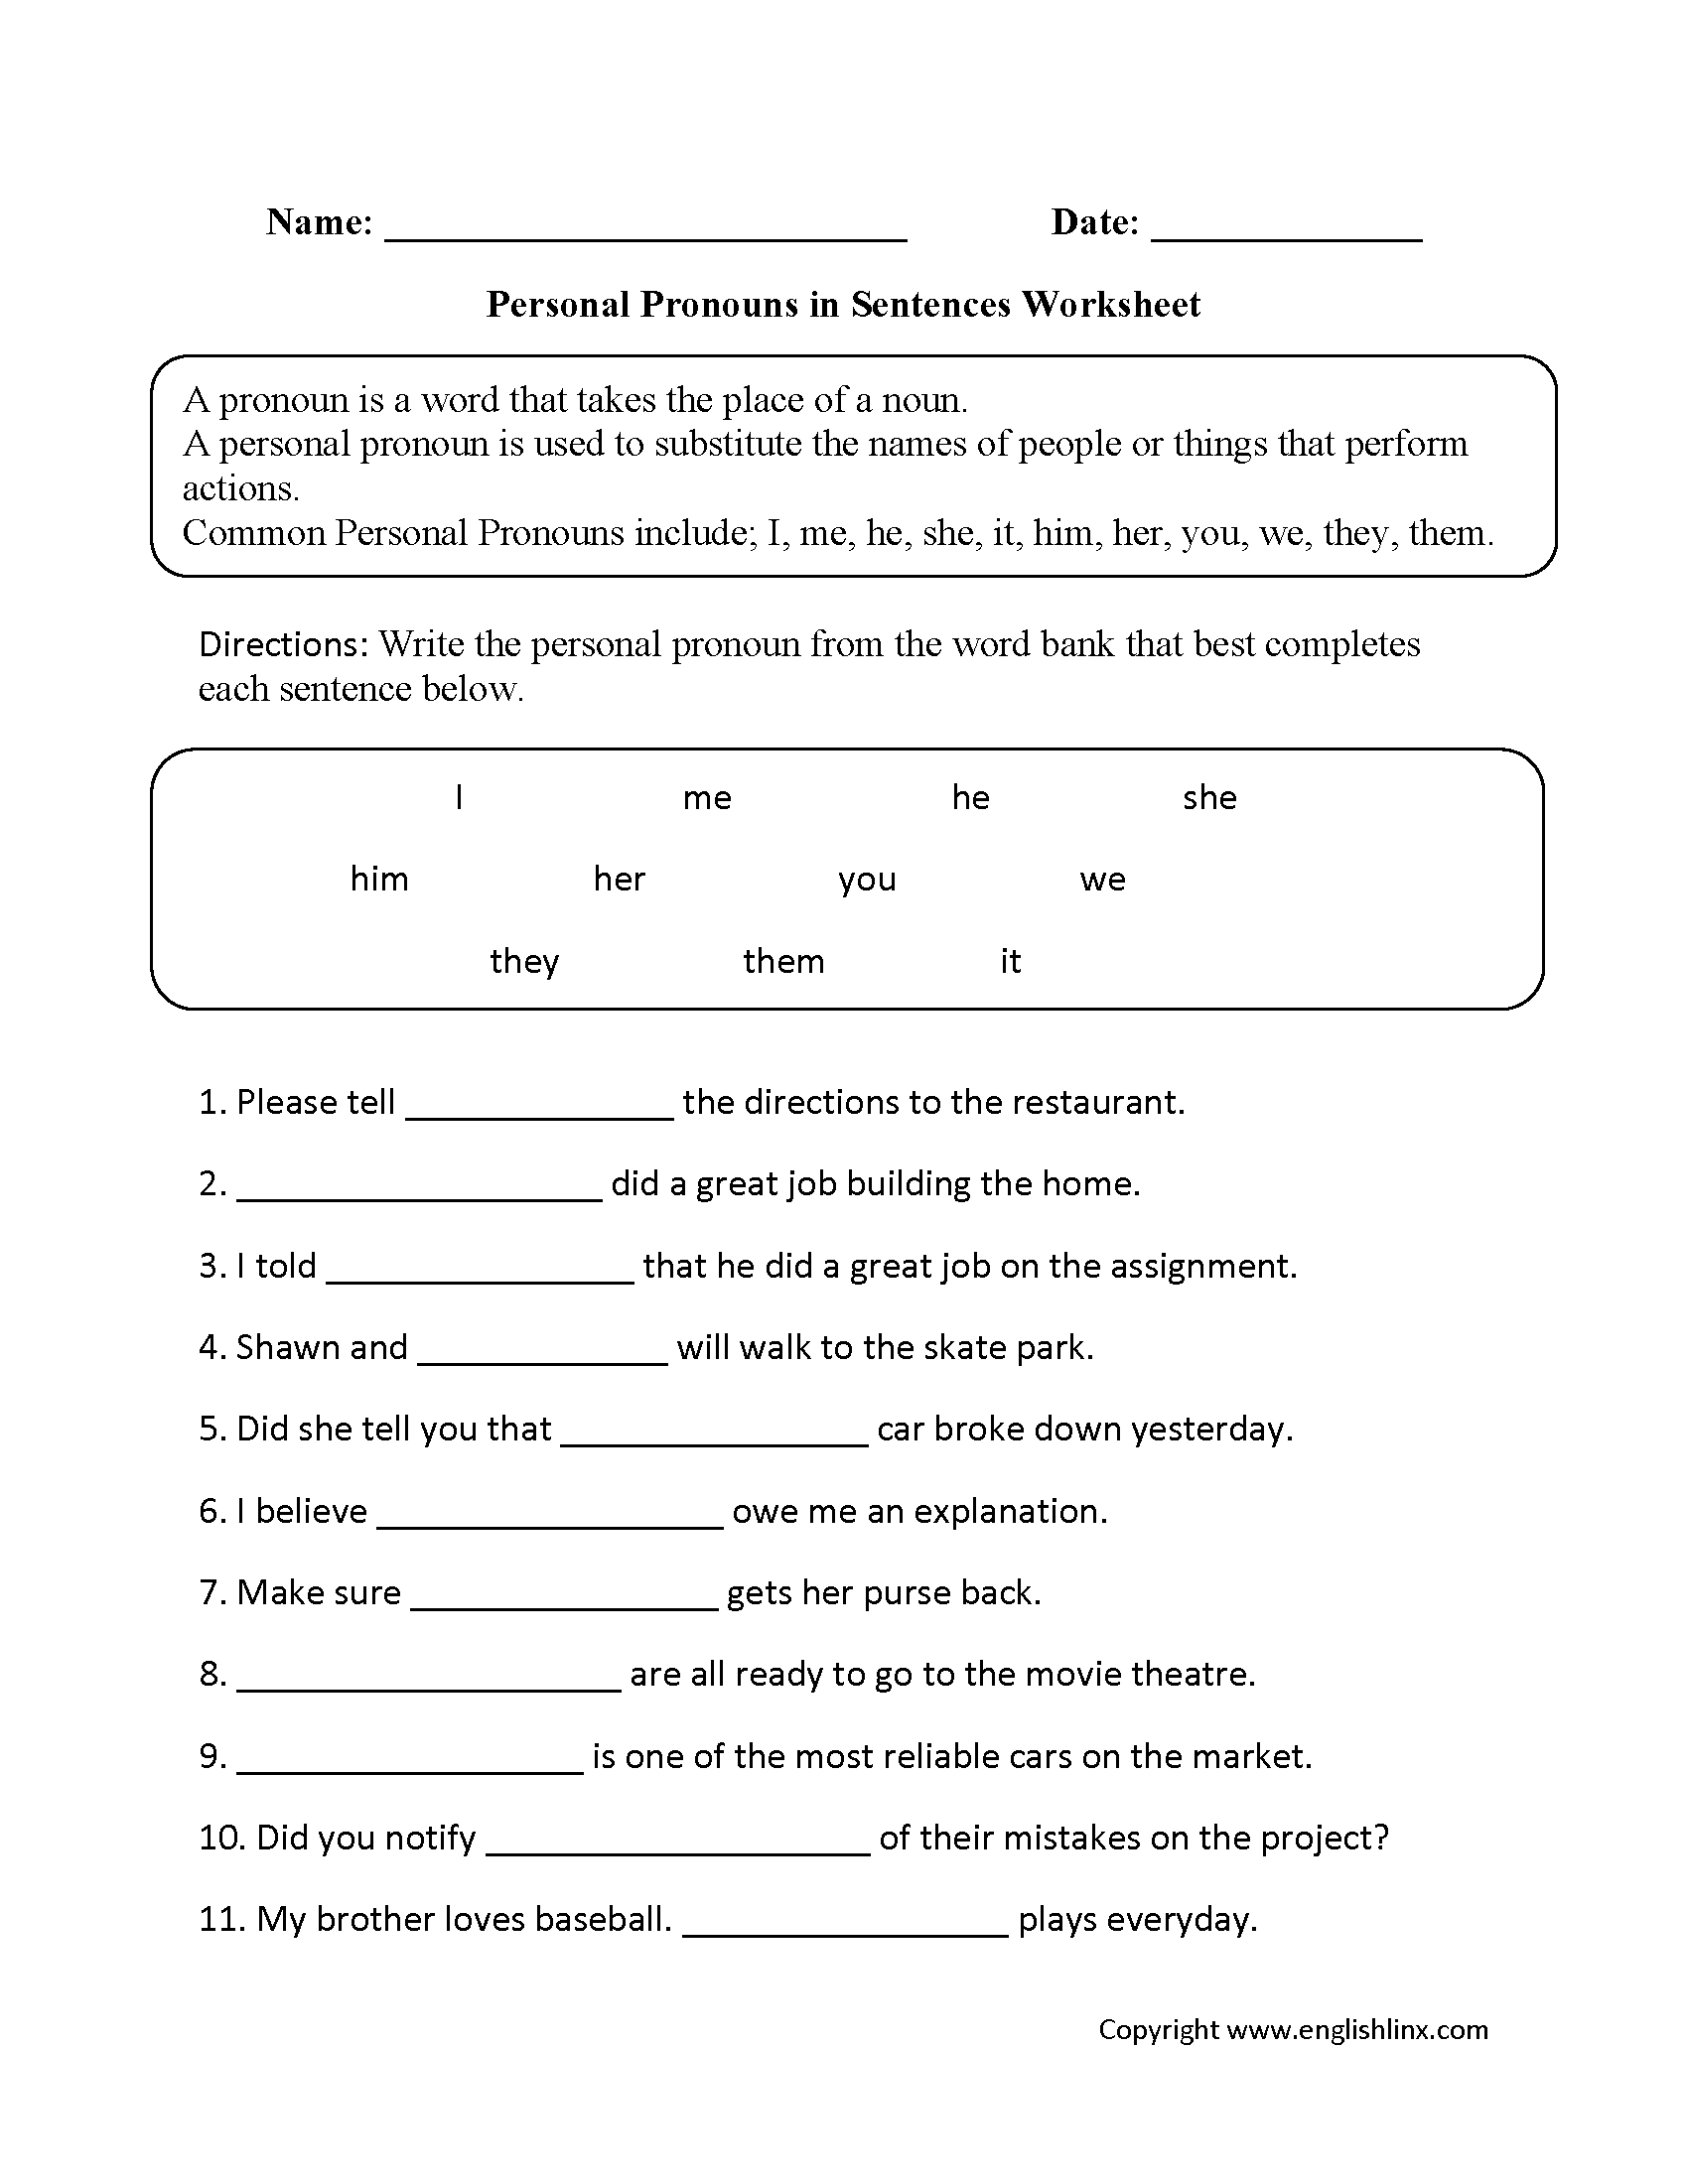 personal-pronouns-worksheets-personal-pronouns-in-sentences-worksheets